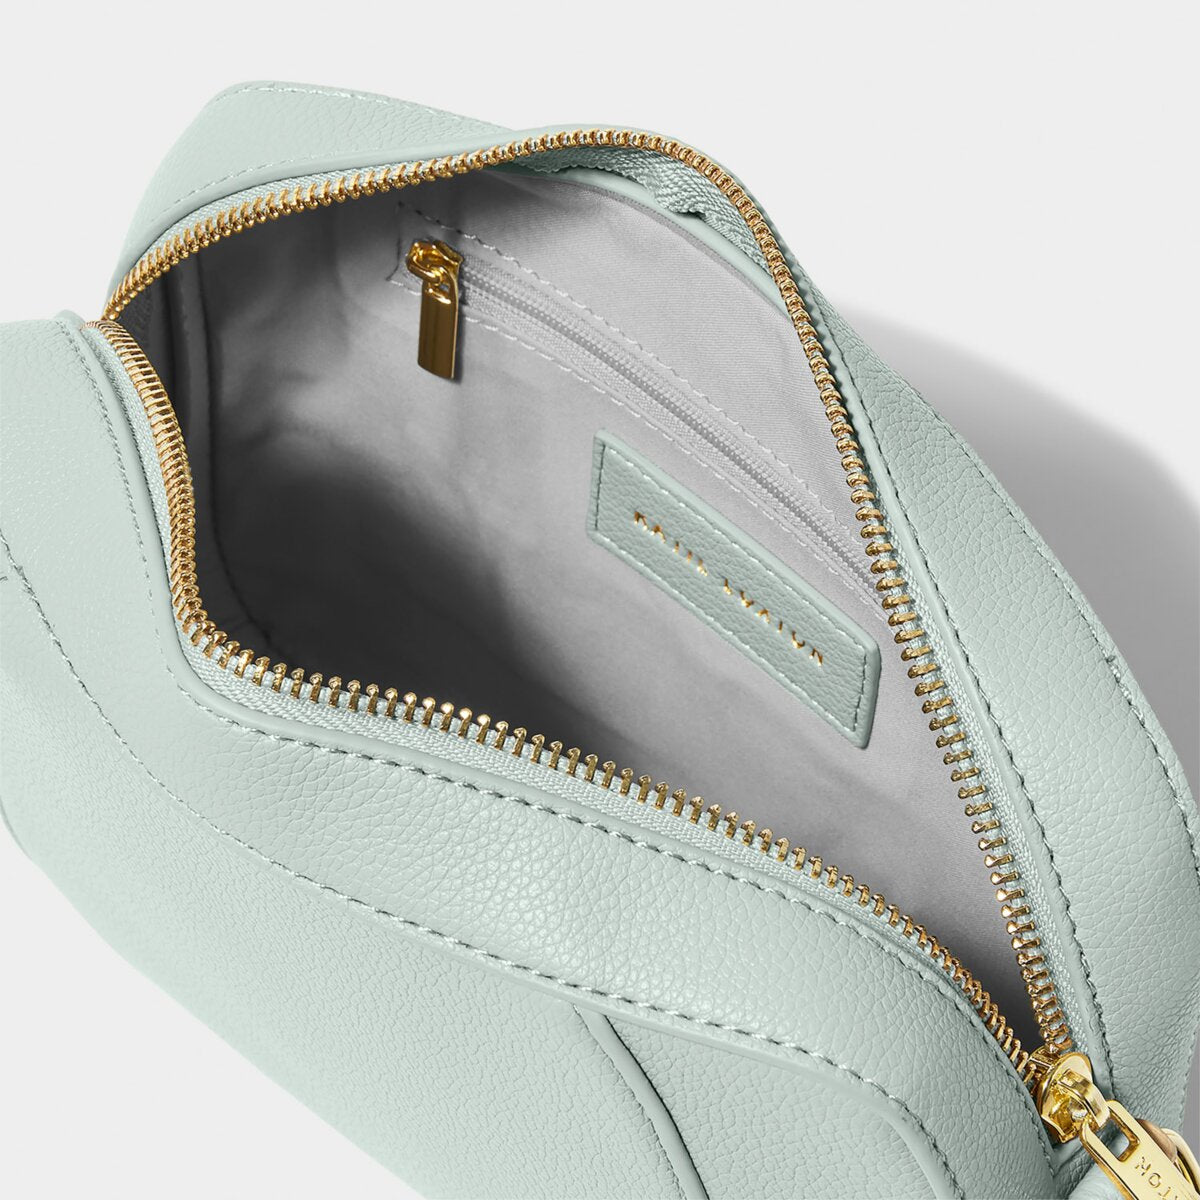 Interior shot of duck egg blue crossbody handbag showing zipped inside pouch